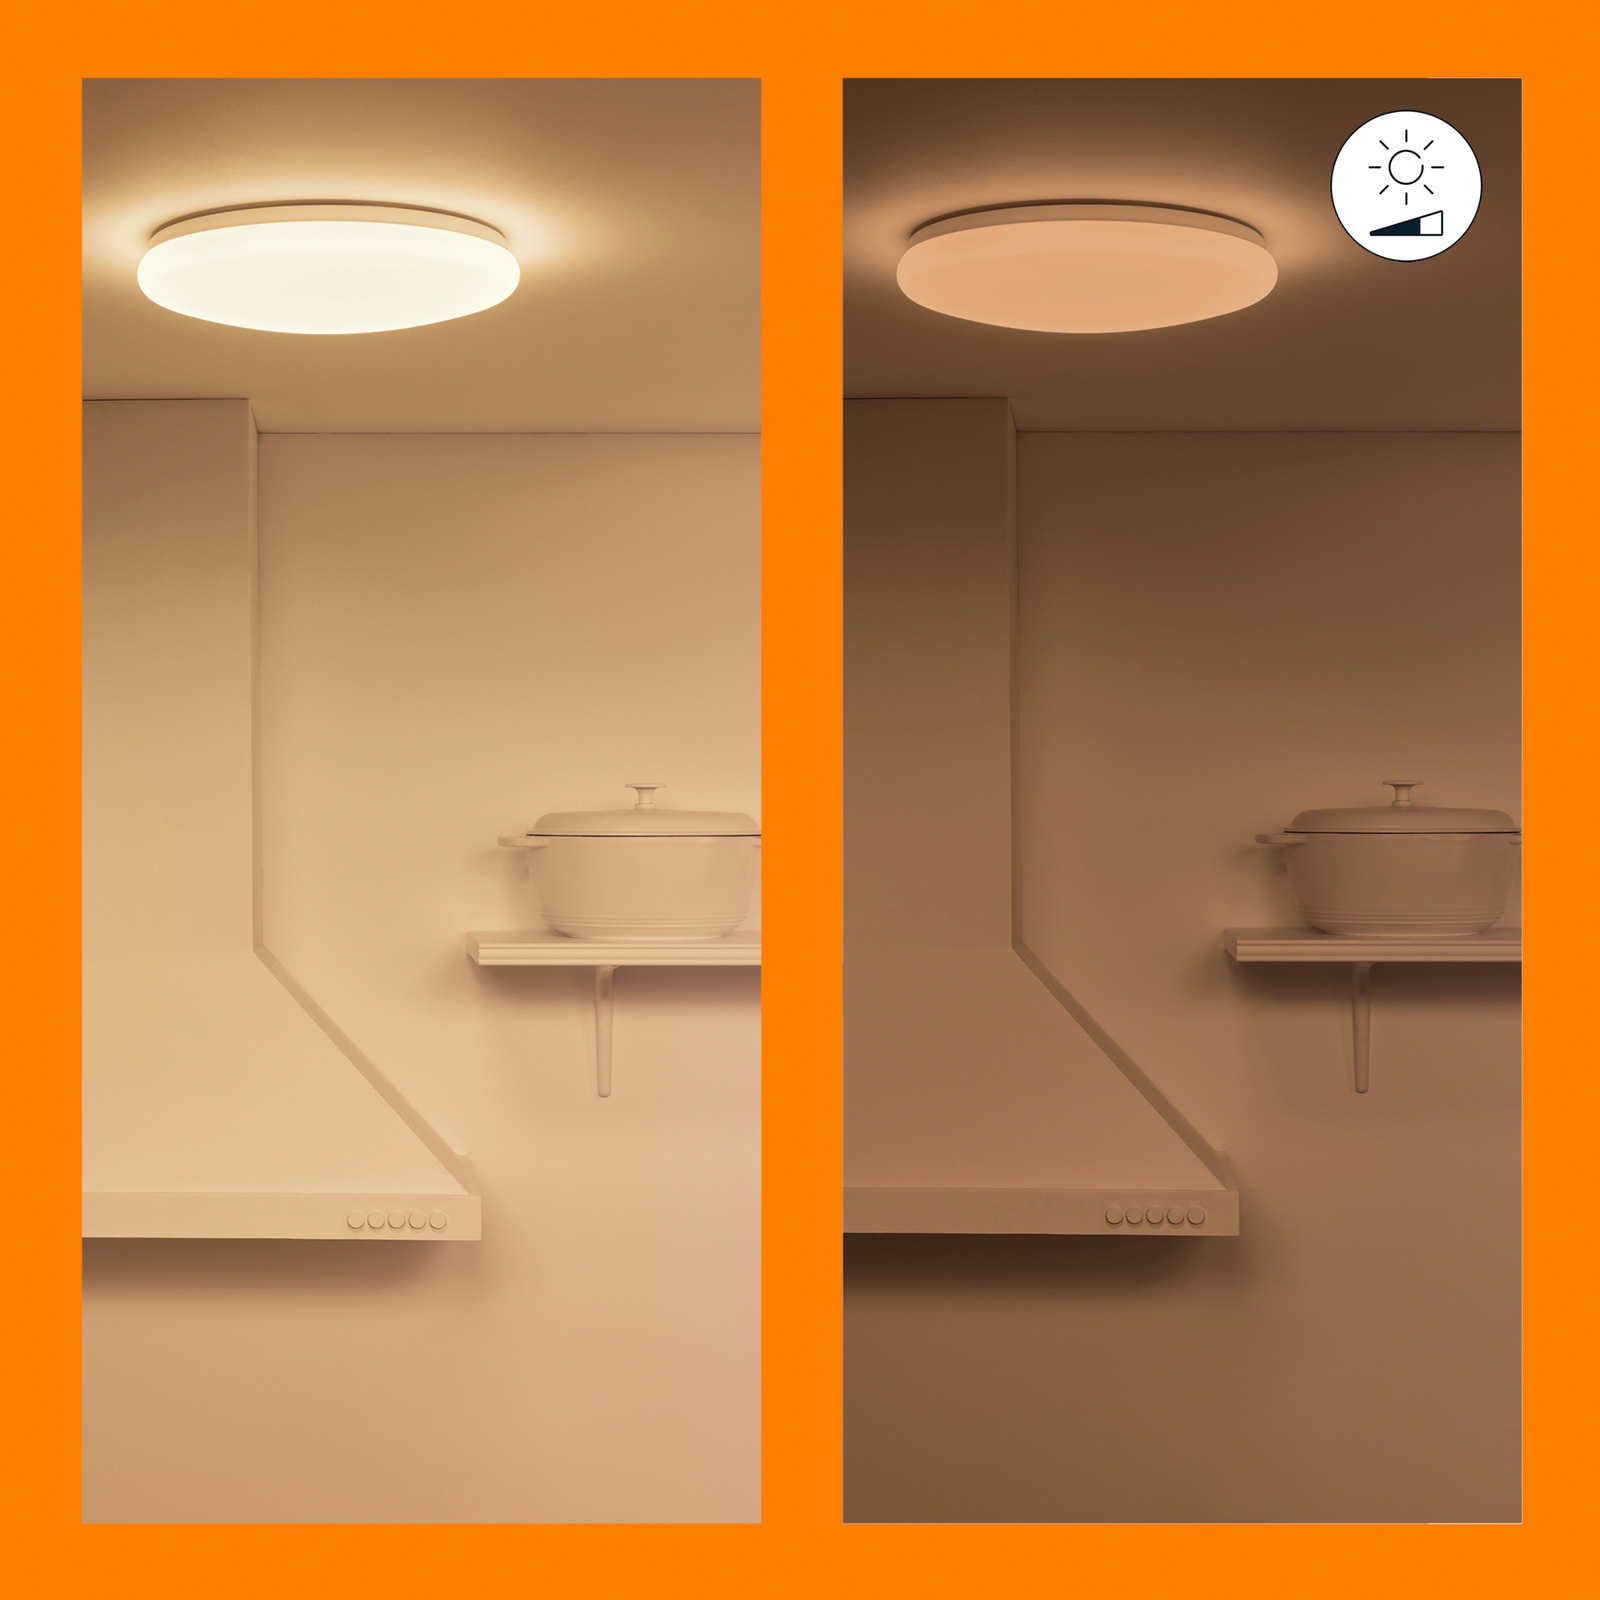 WiZ Adria LED лампа за таван, 17 W, топло бяла